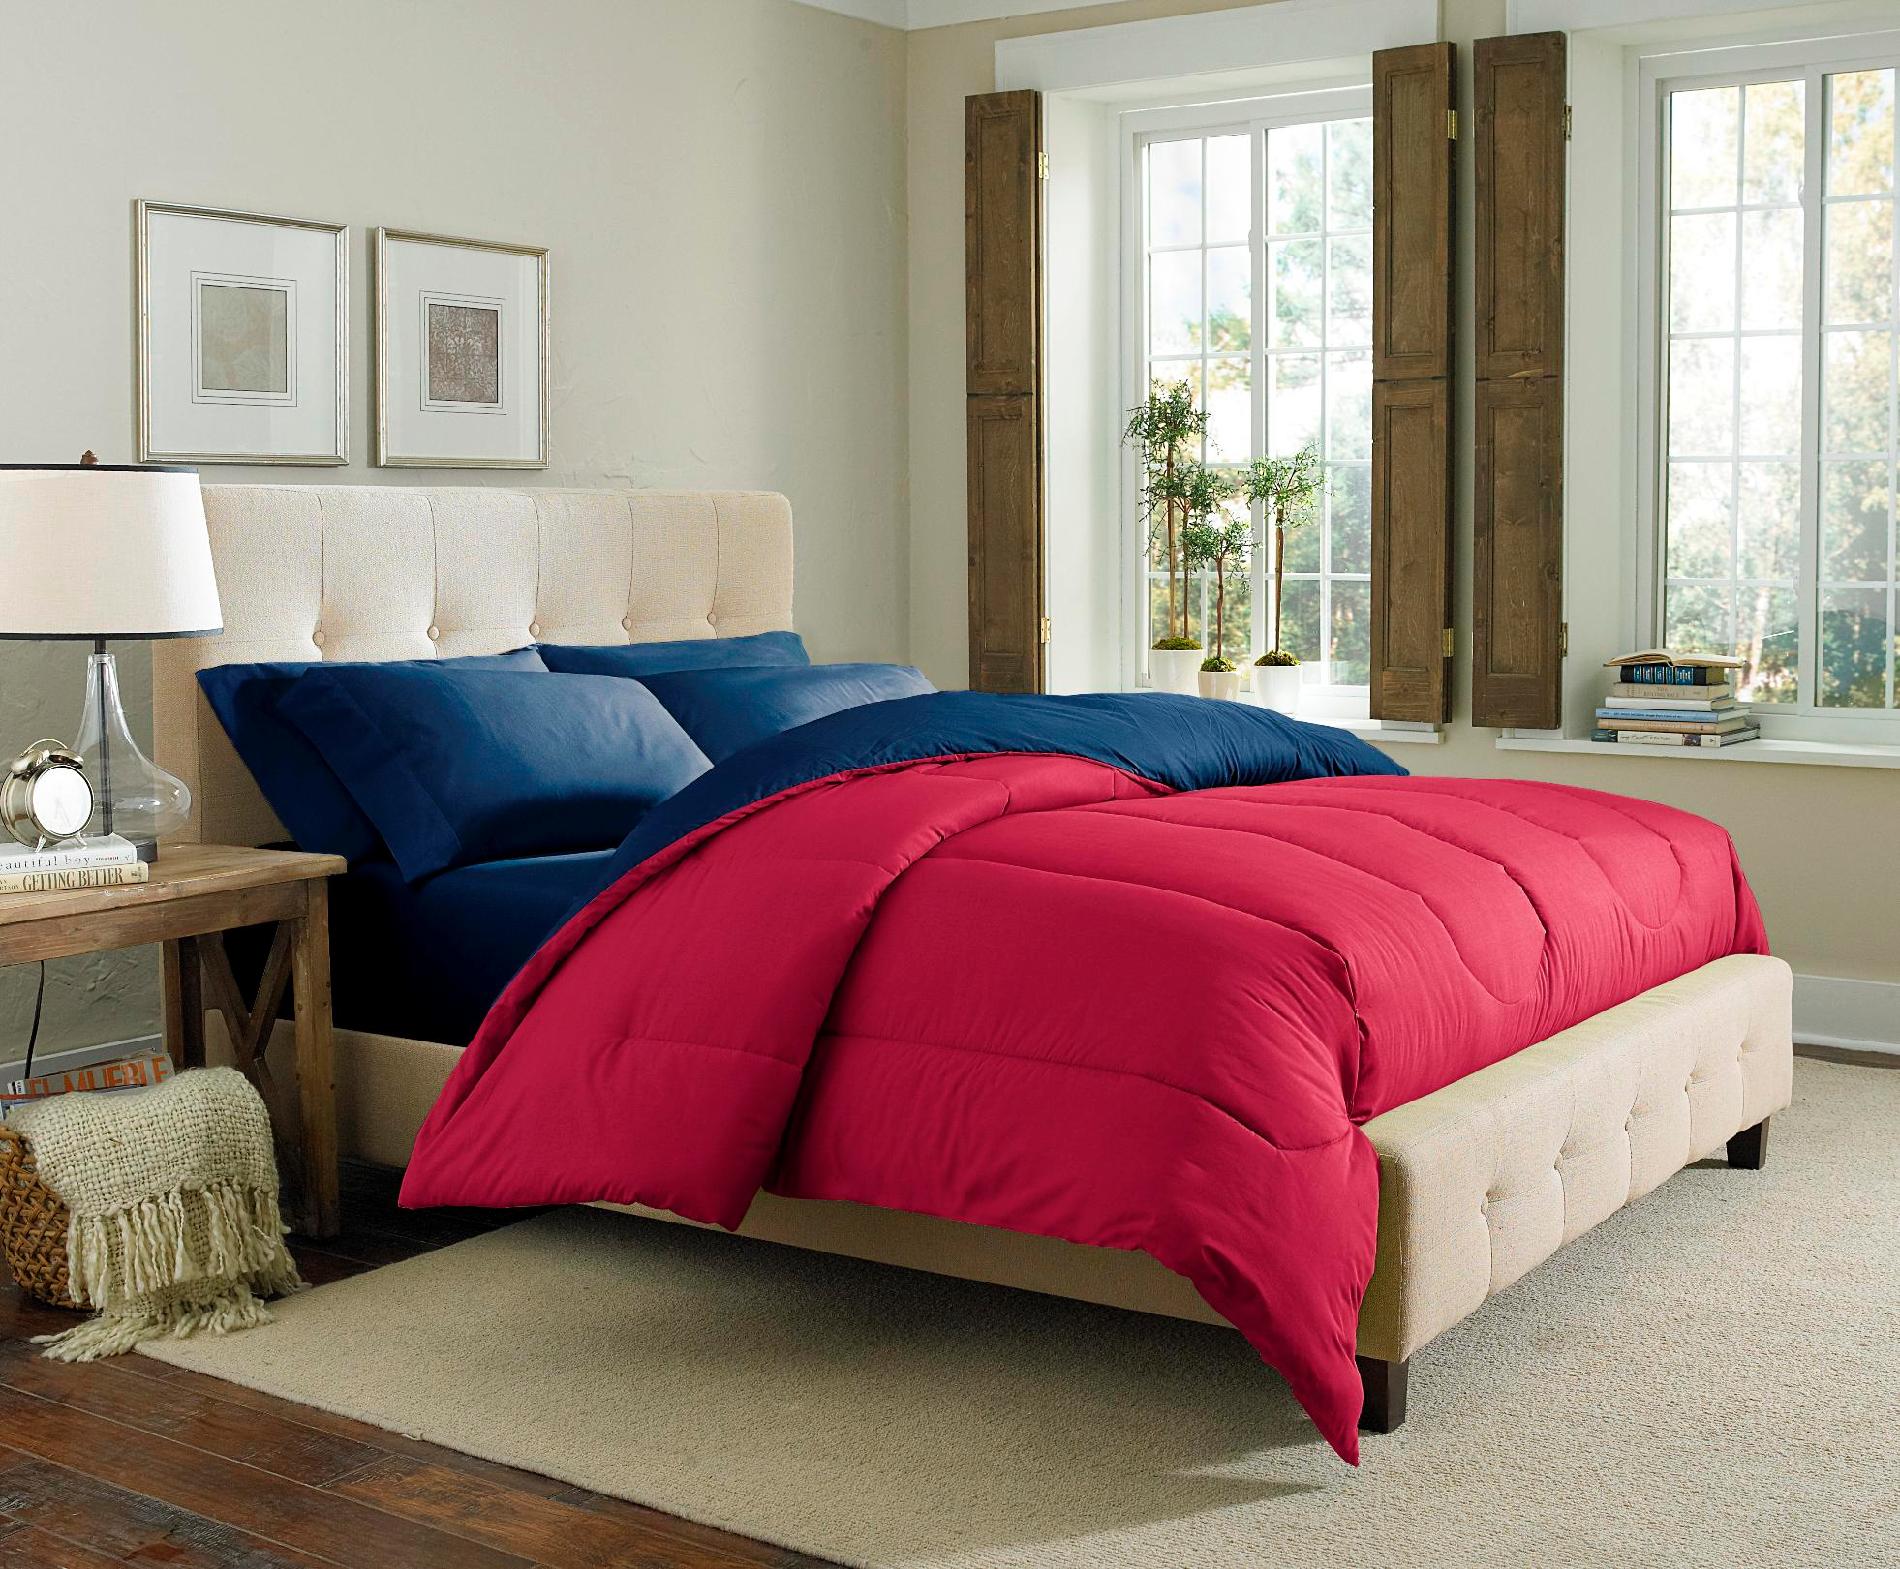 Solid Reversible Comforter - Red/Navy